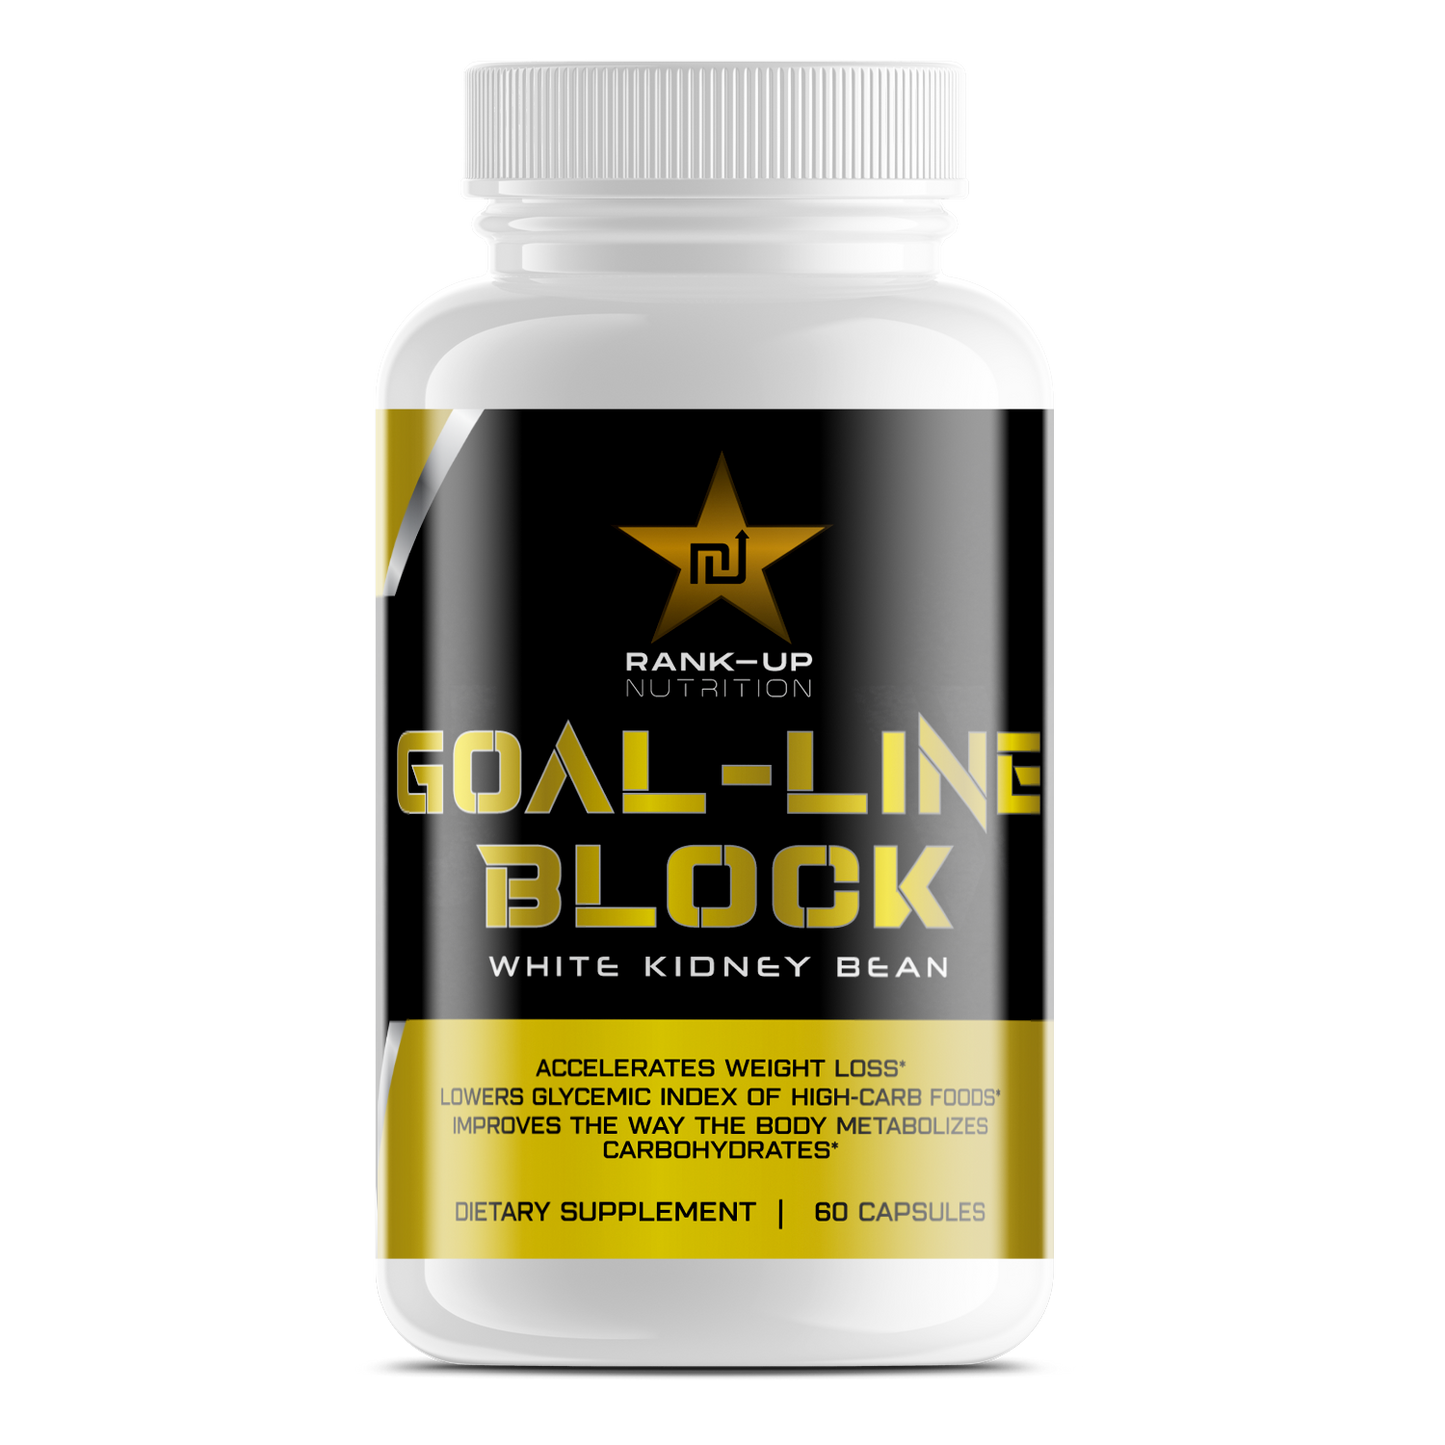 GOAL-LINE BLOCK Carb Blocker